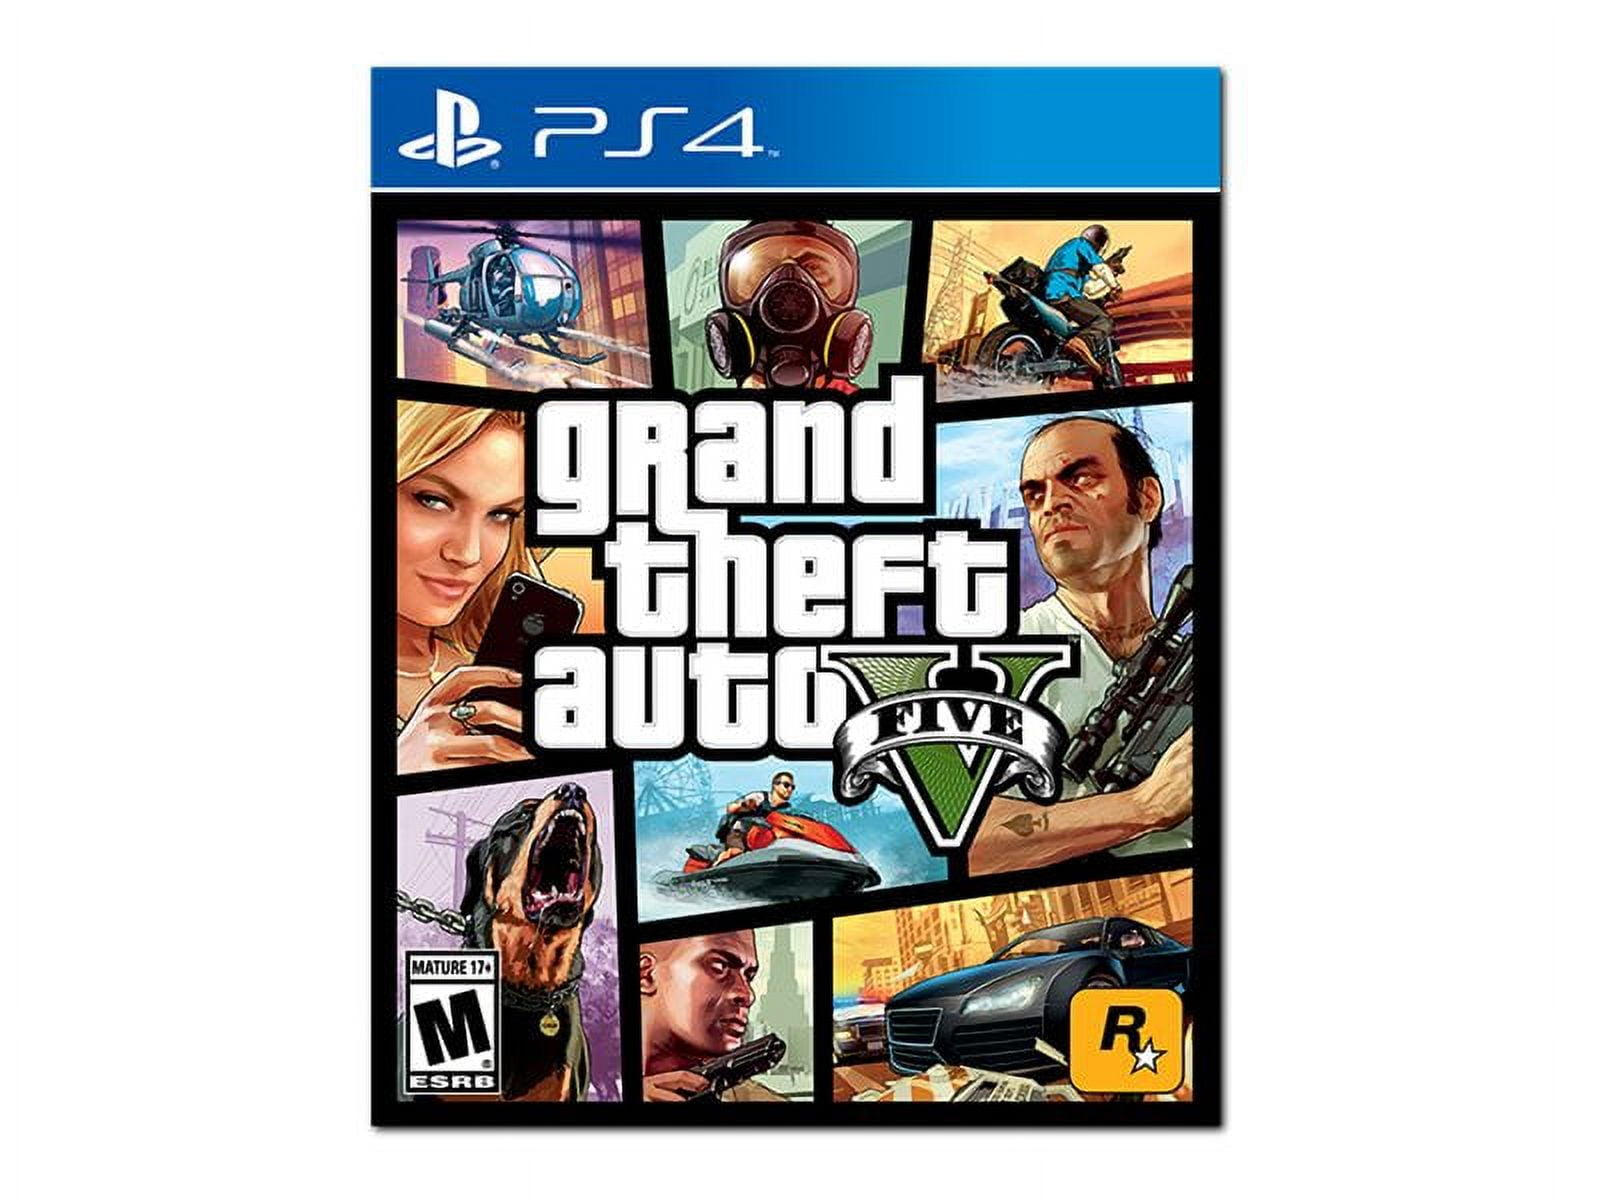 Grand Theft Auto GTA V 5 for Sony Playstation 4 PS4